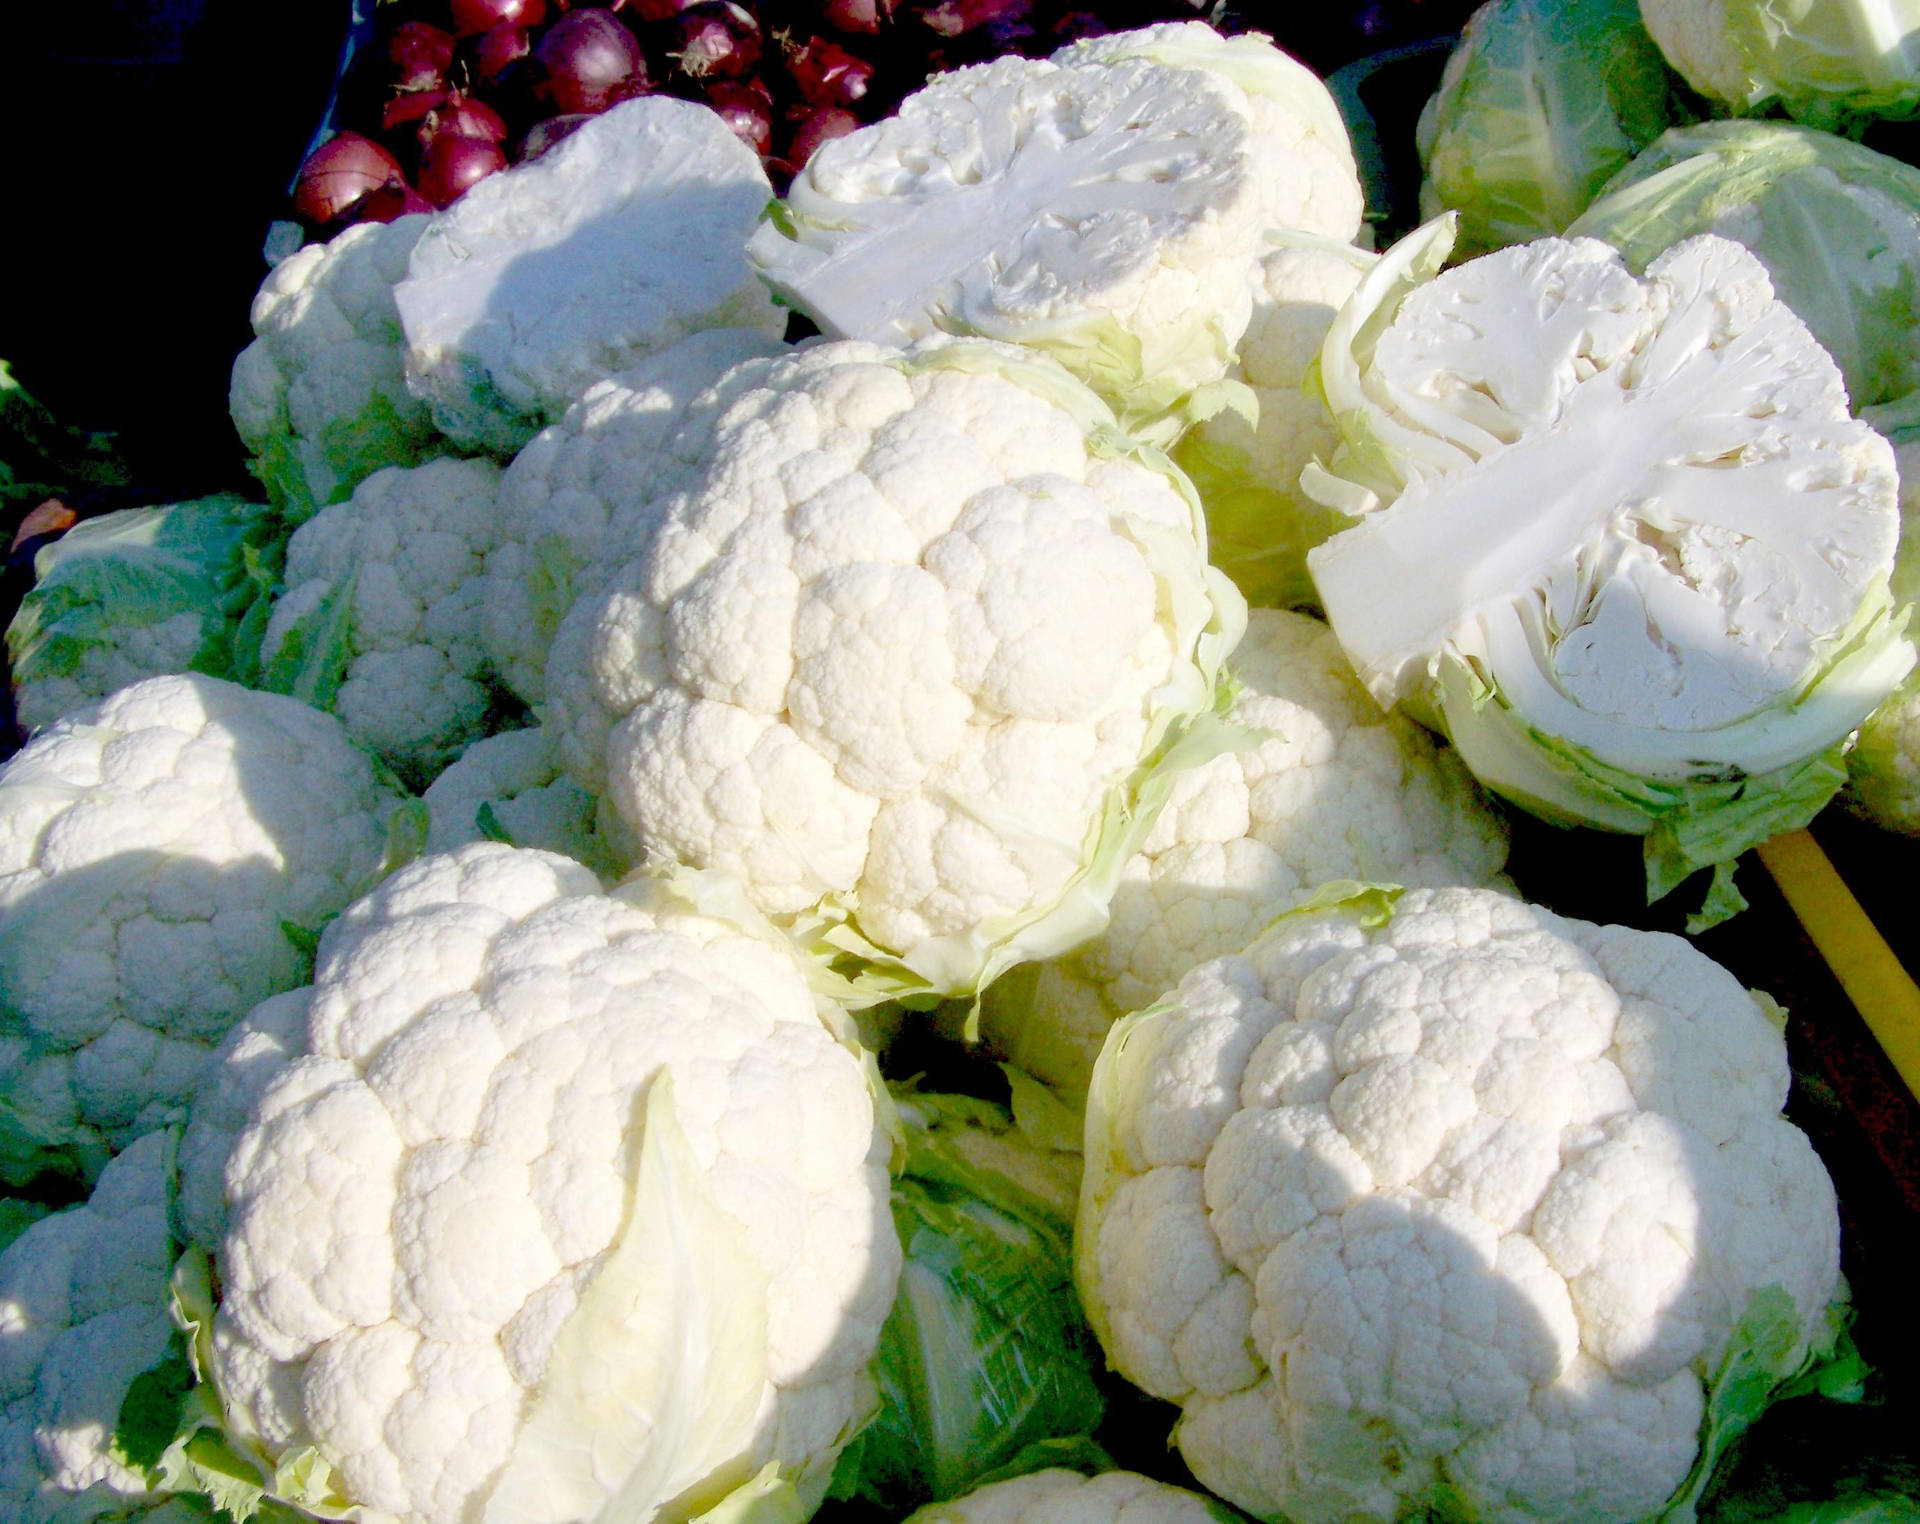 Cauliflowersunbeam Translates Into Italian As 